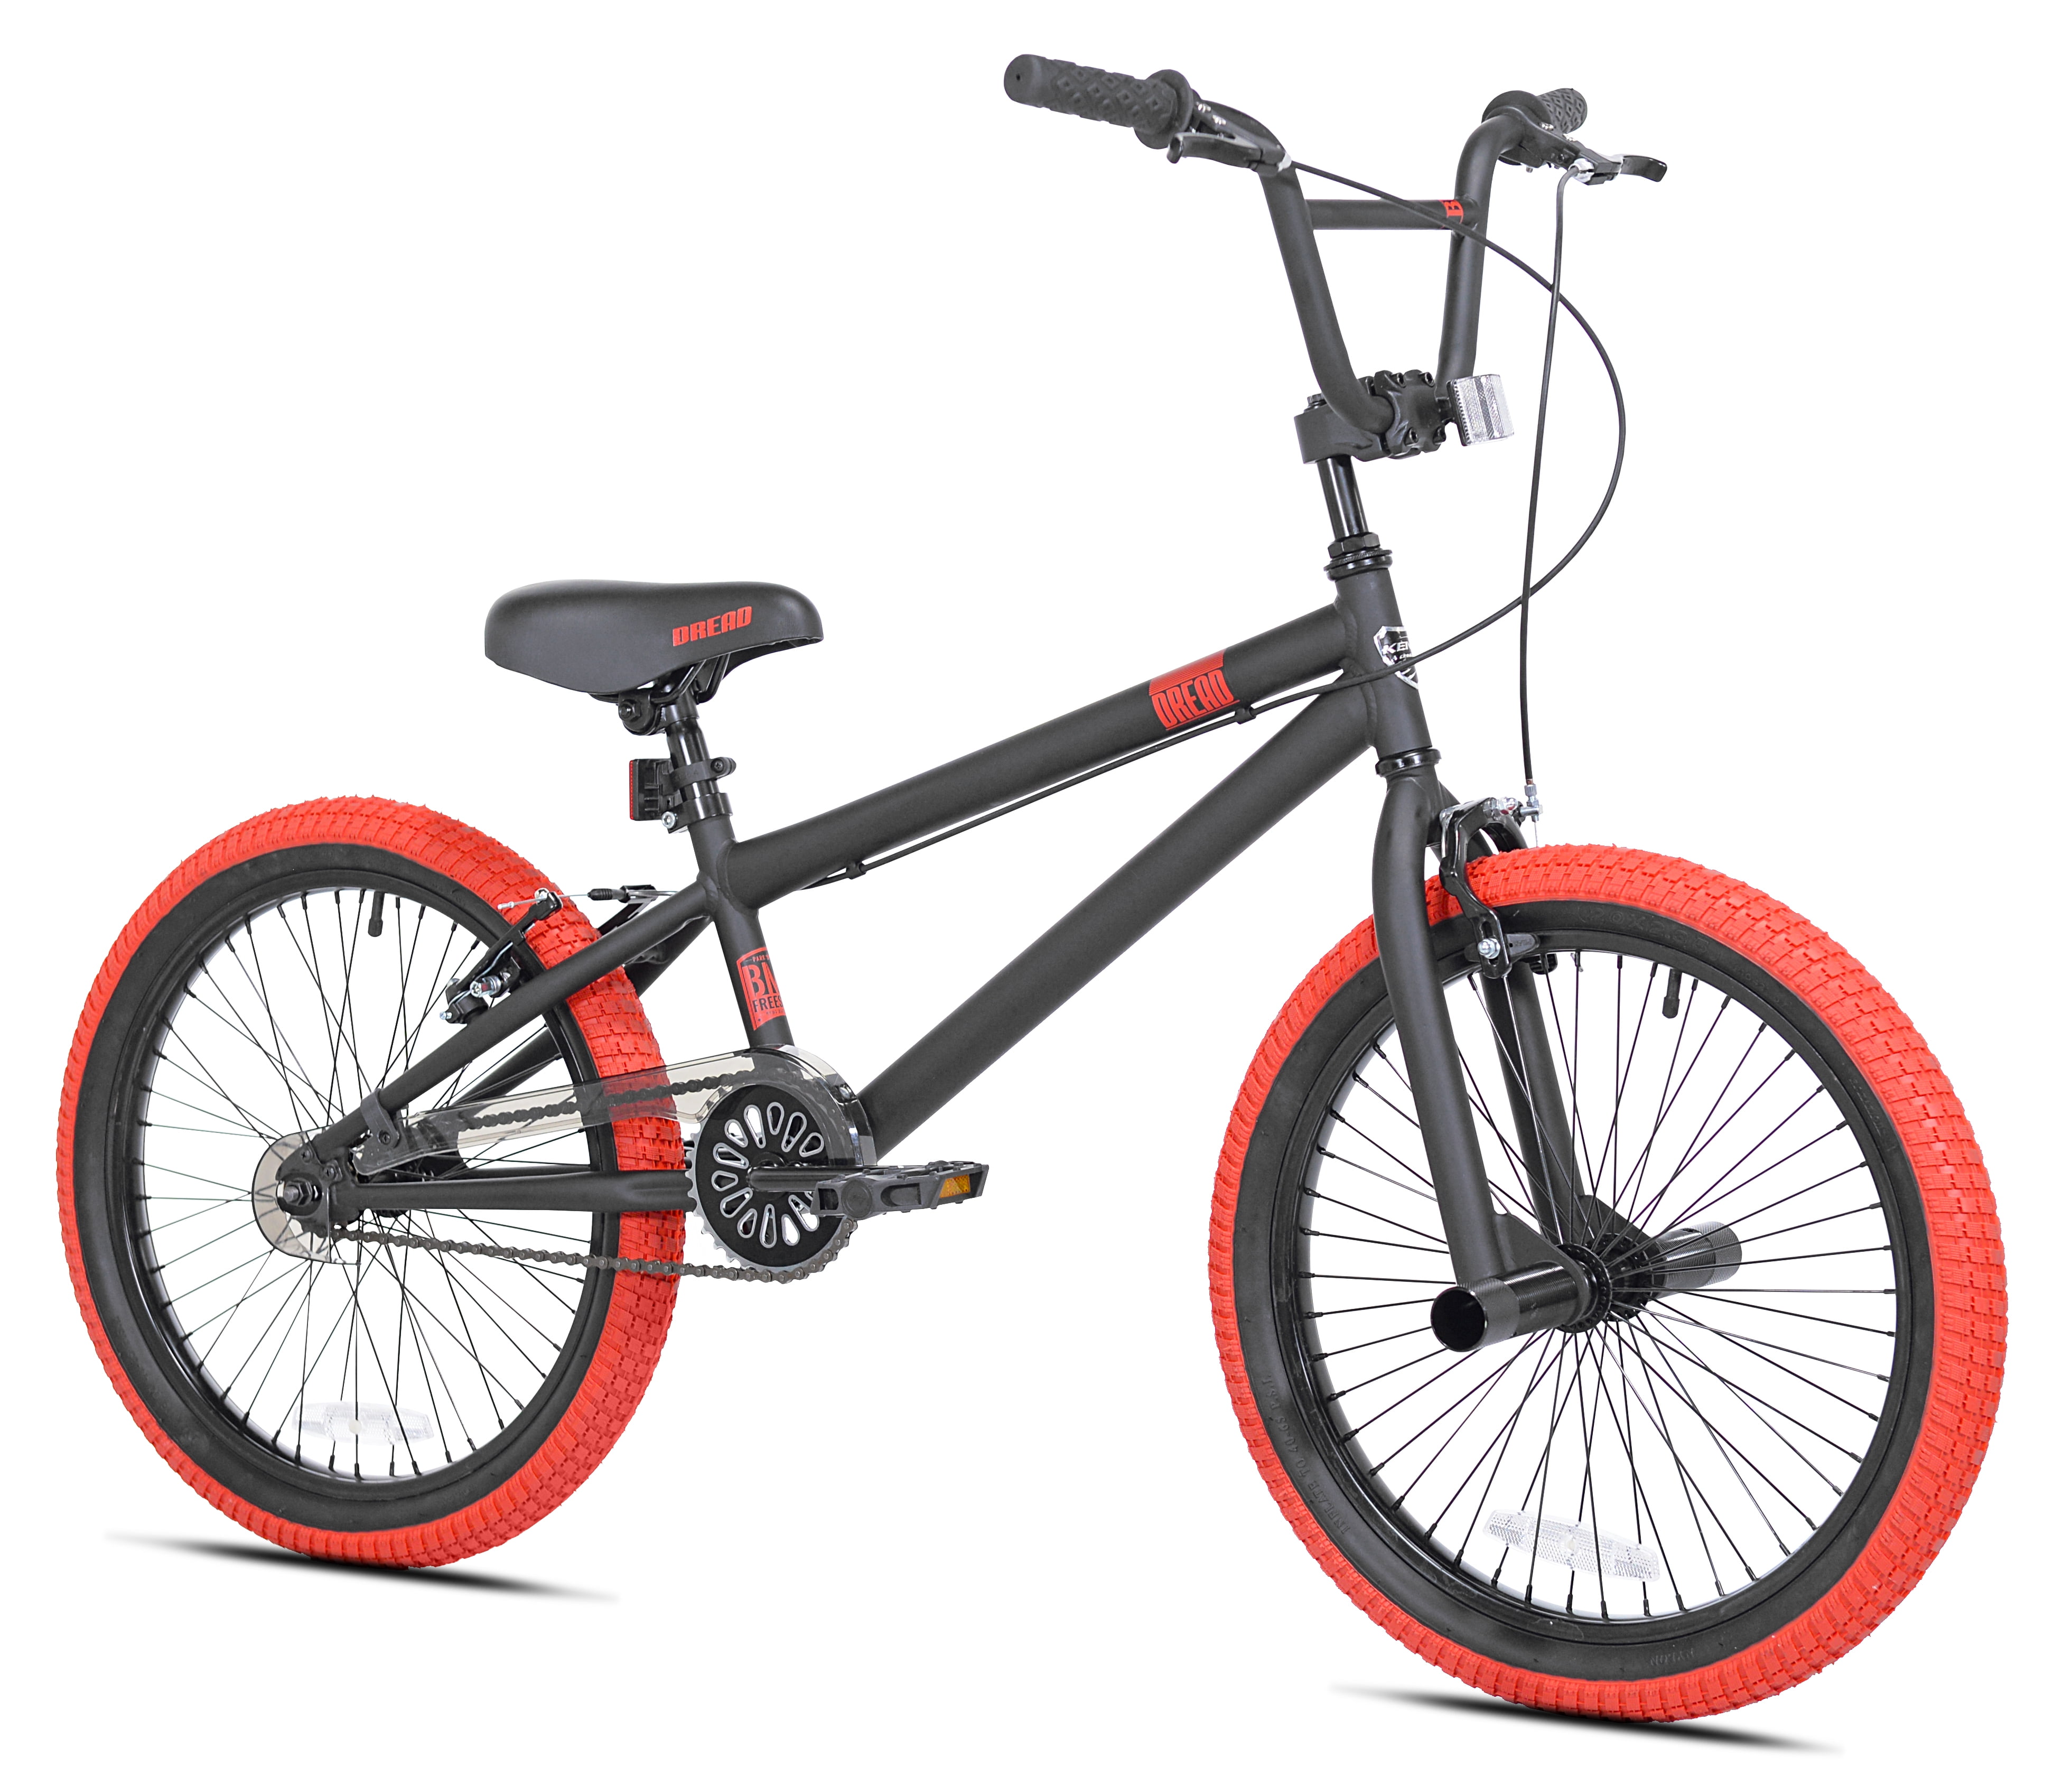 20 pulgadas estilo libre solo 11,68 kg rotor de 360° Bicicleta BMX para niños MGP Madd Gear Affix